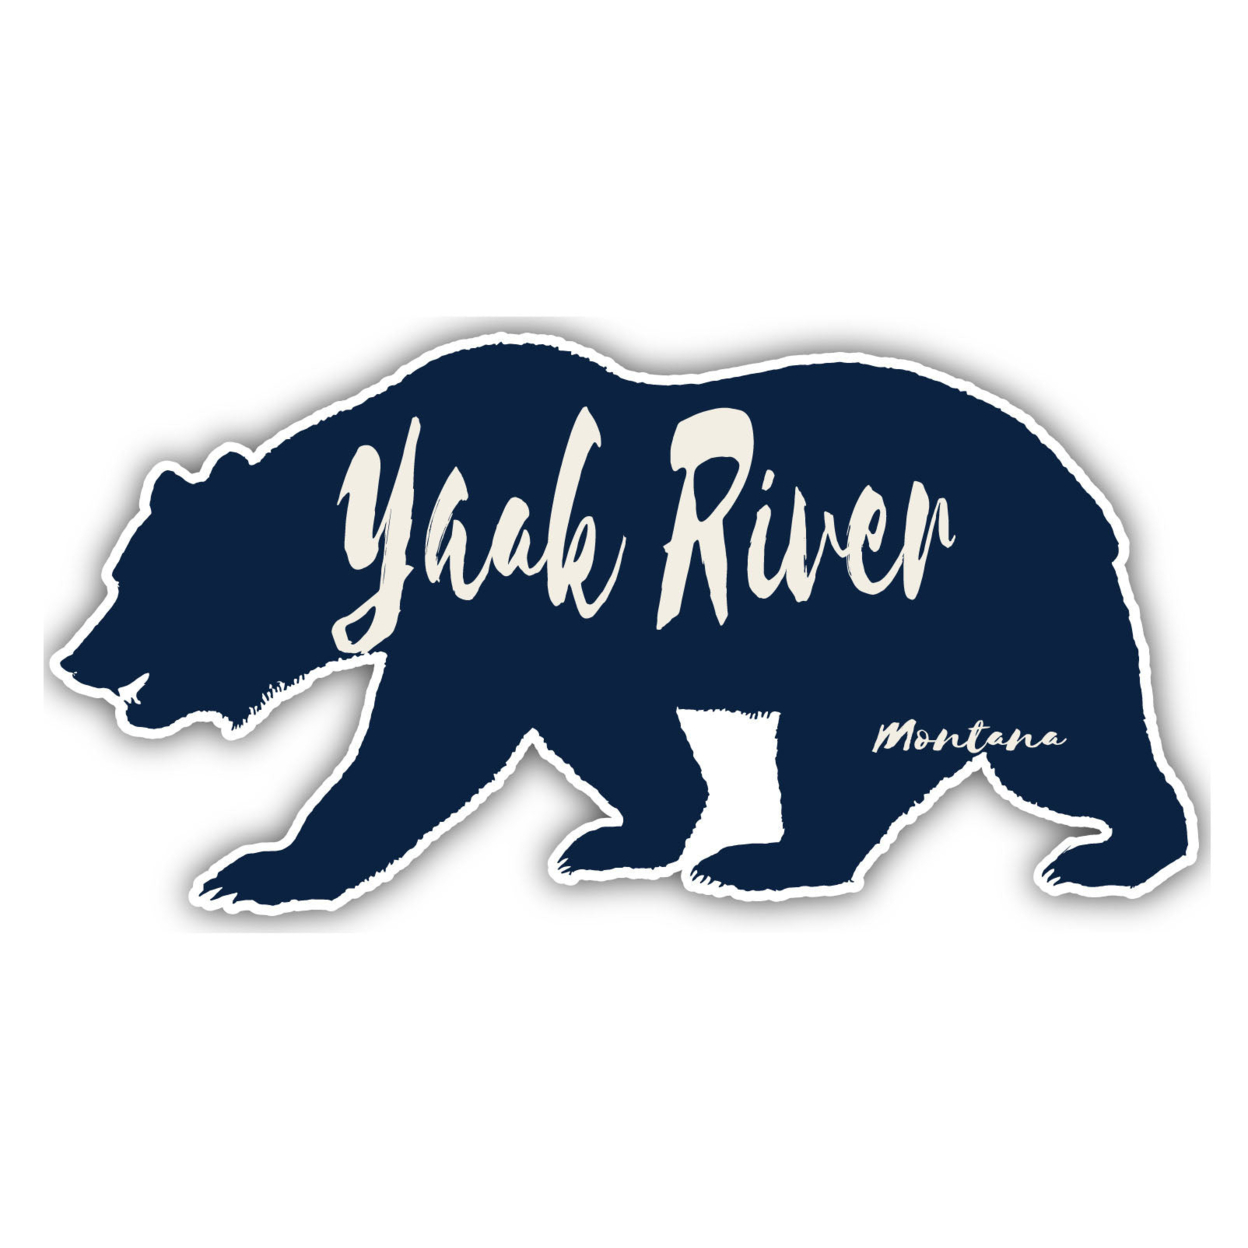 Yaak River Montana Souvenir Decorative Stickers (Choose Theme And Size) - Single Unit, 4-Inch, Bear